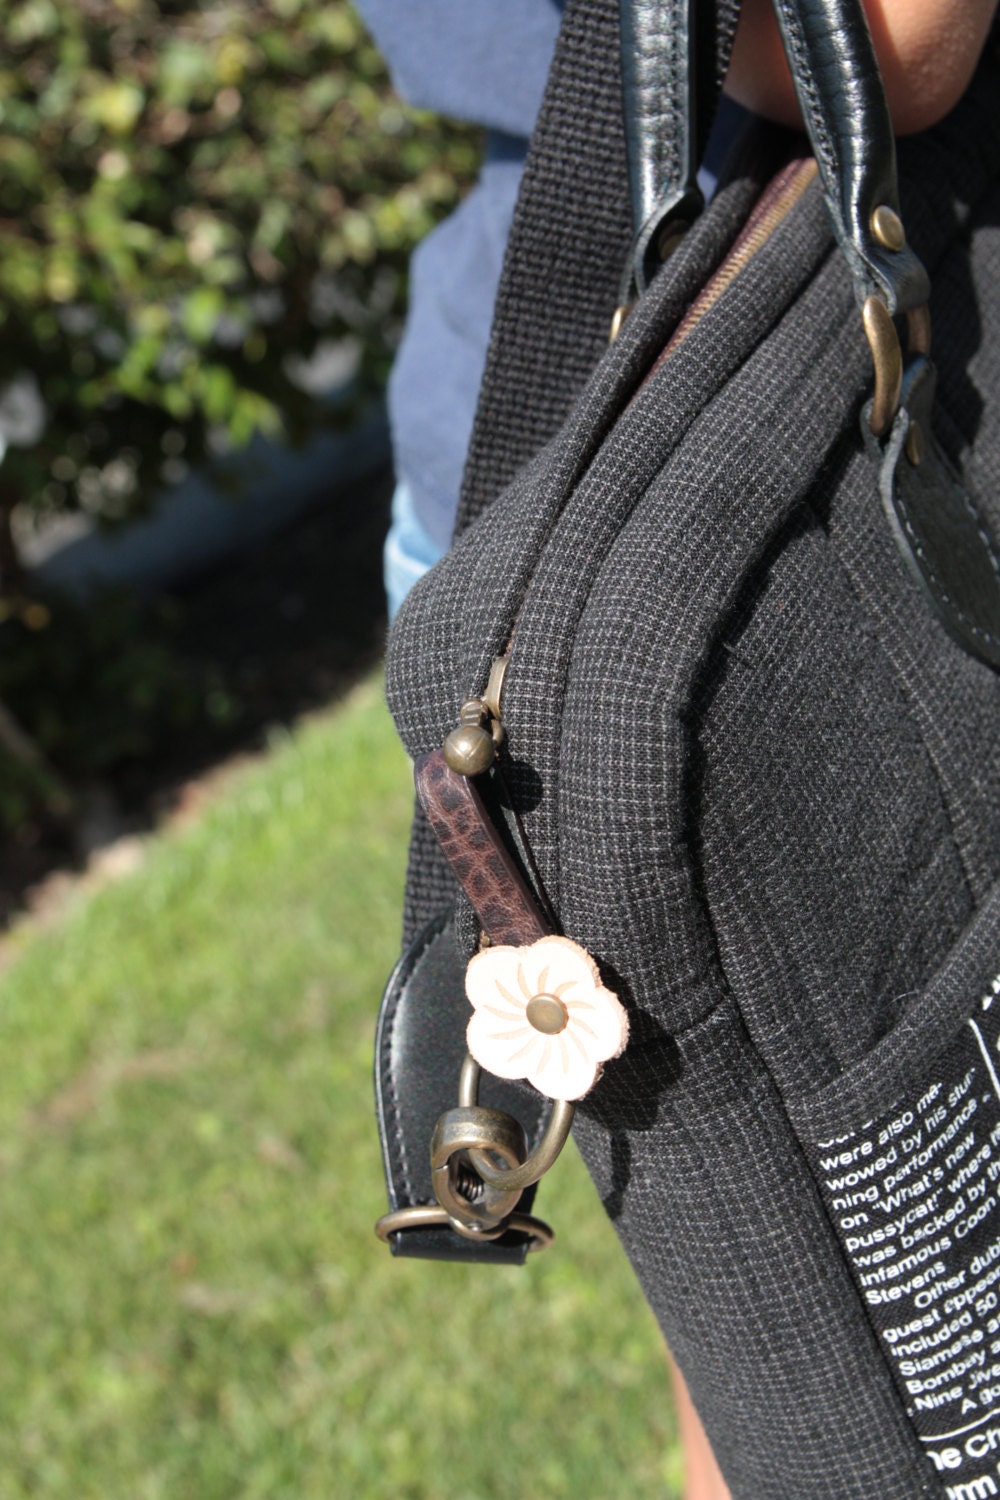 33.4 ~ 52.7 byhands Adjustable Webbing Crossbody Bag Strap with 100%  Genuine Leather Tab (44-1421)